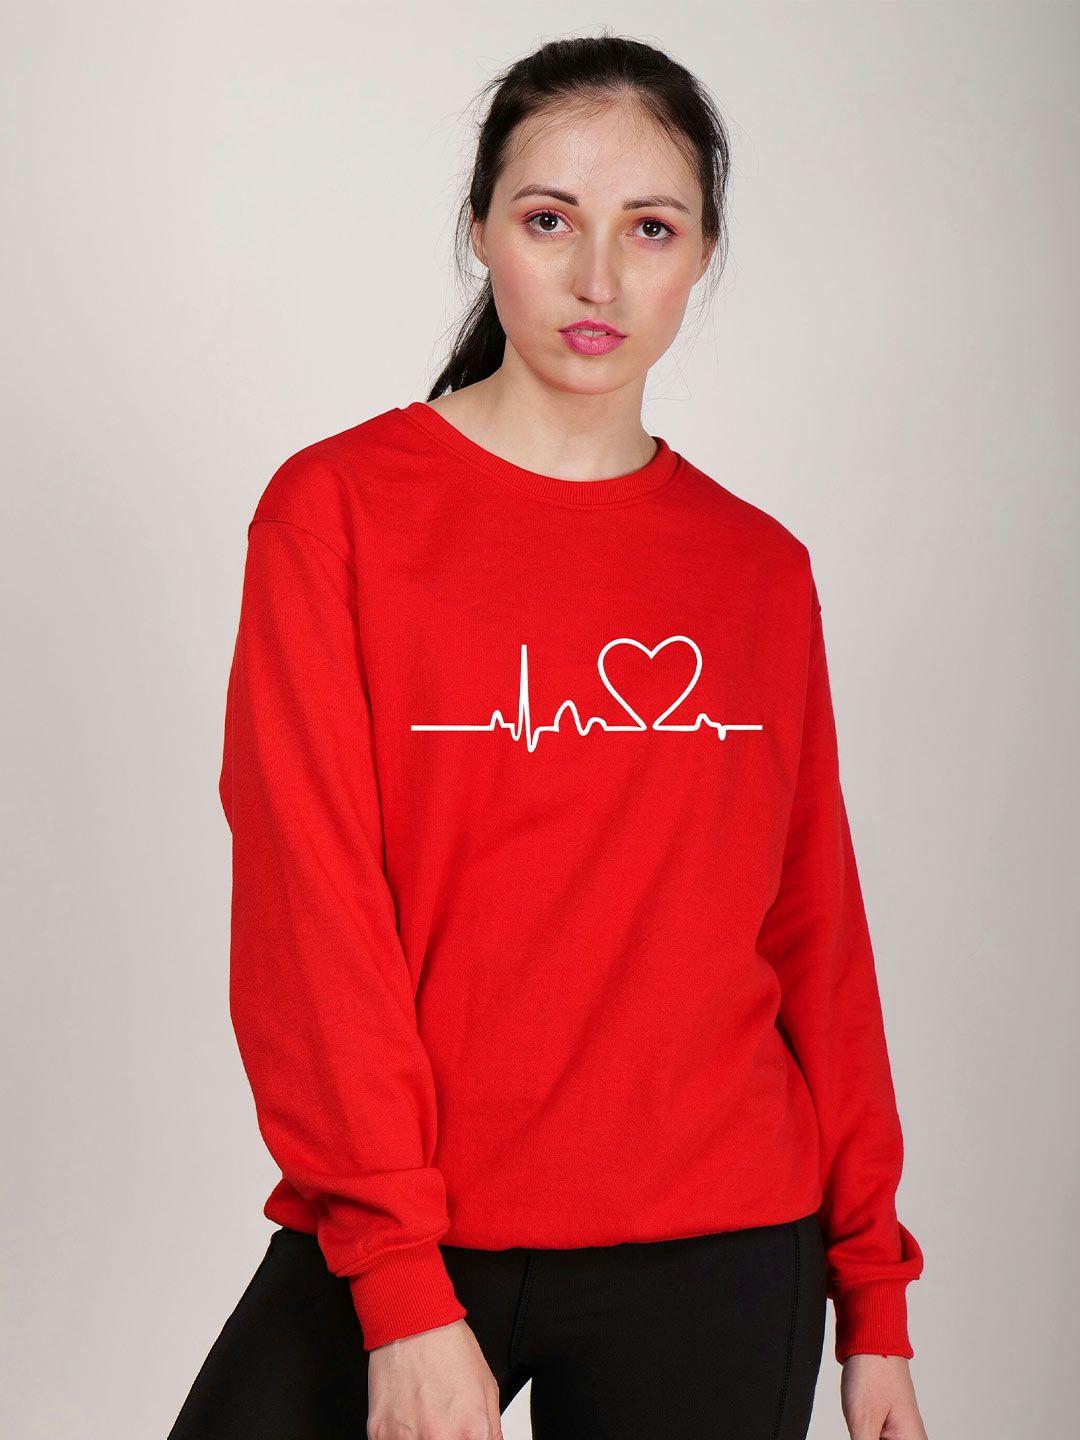 fashion and youth graphic printed fleece sweatshirt